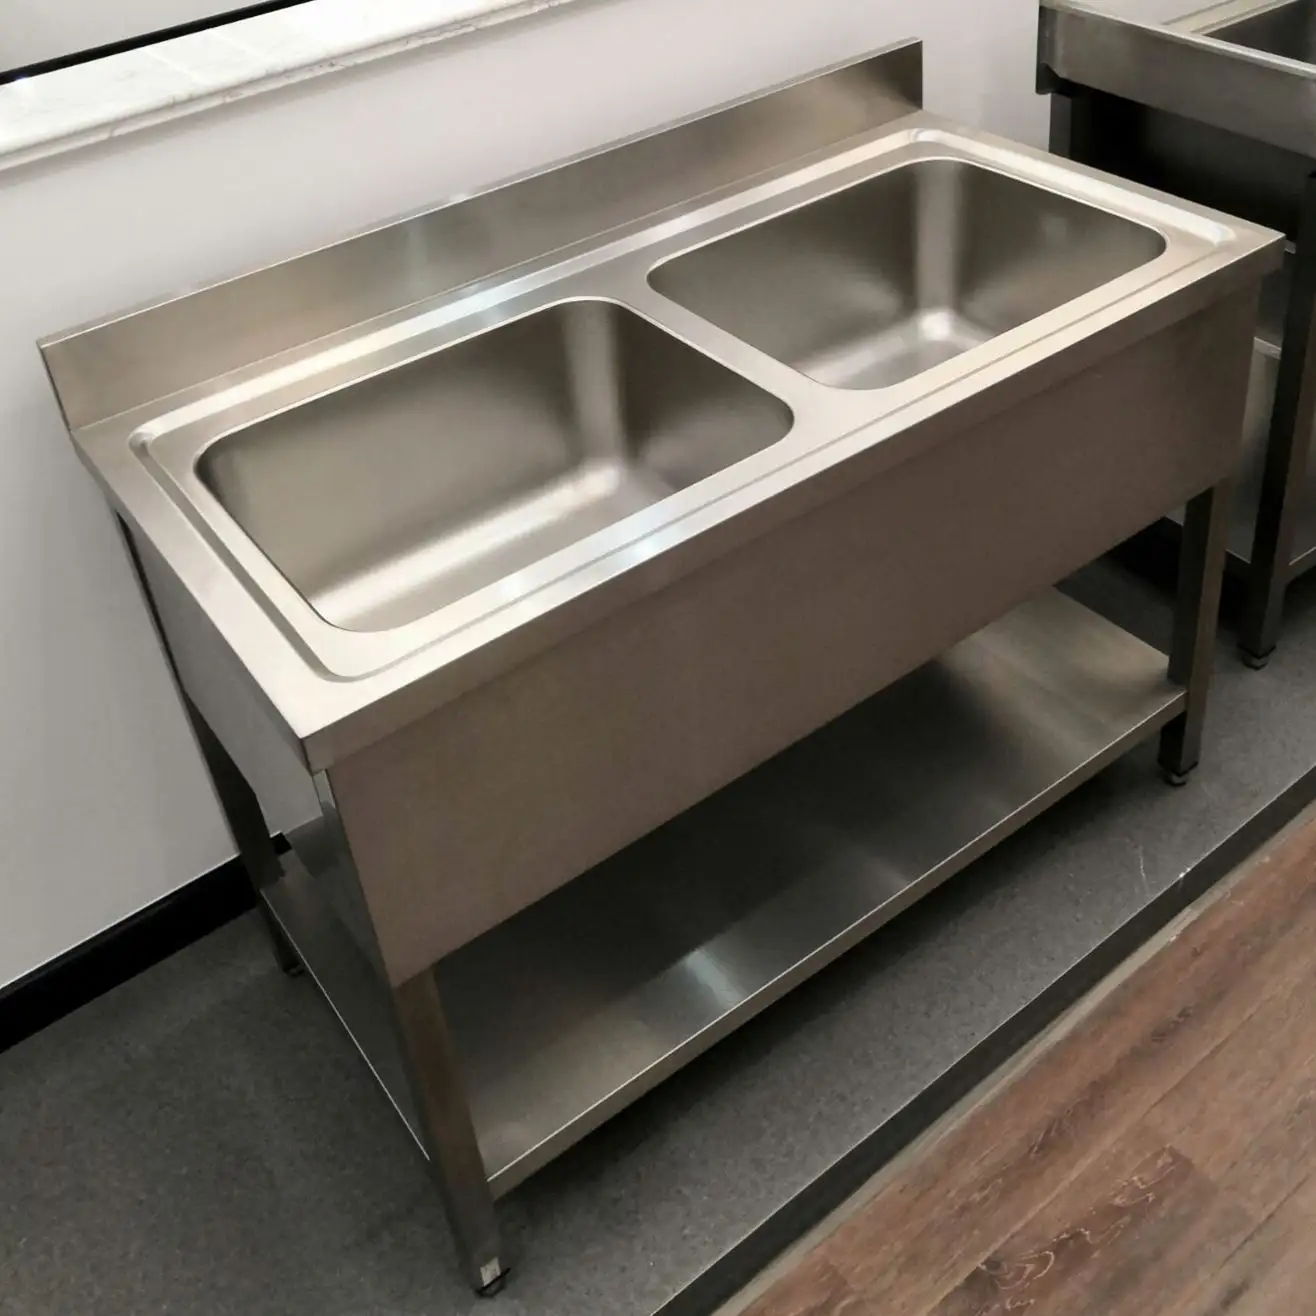 16 gauge manufacturer double bowl handmade 304 stainless steel apron full kitchen bathroom sink